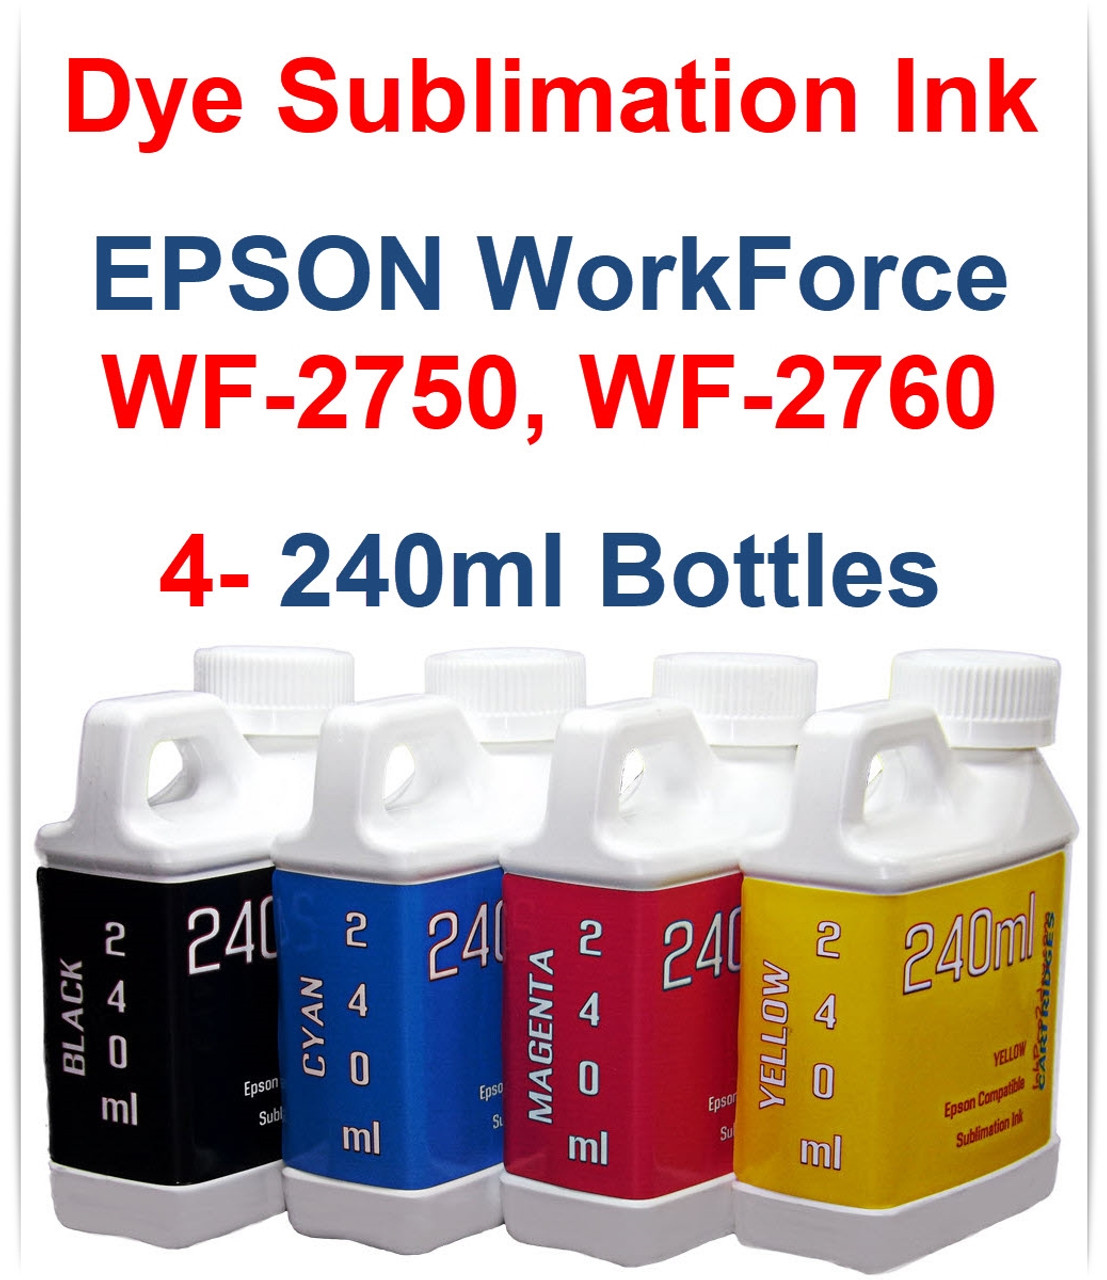 4- 240ml bottles Dye Sublimation Ink for Epson WorkForce WF-2750 WF-2760 Printers